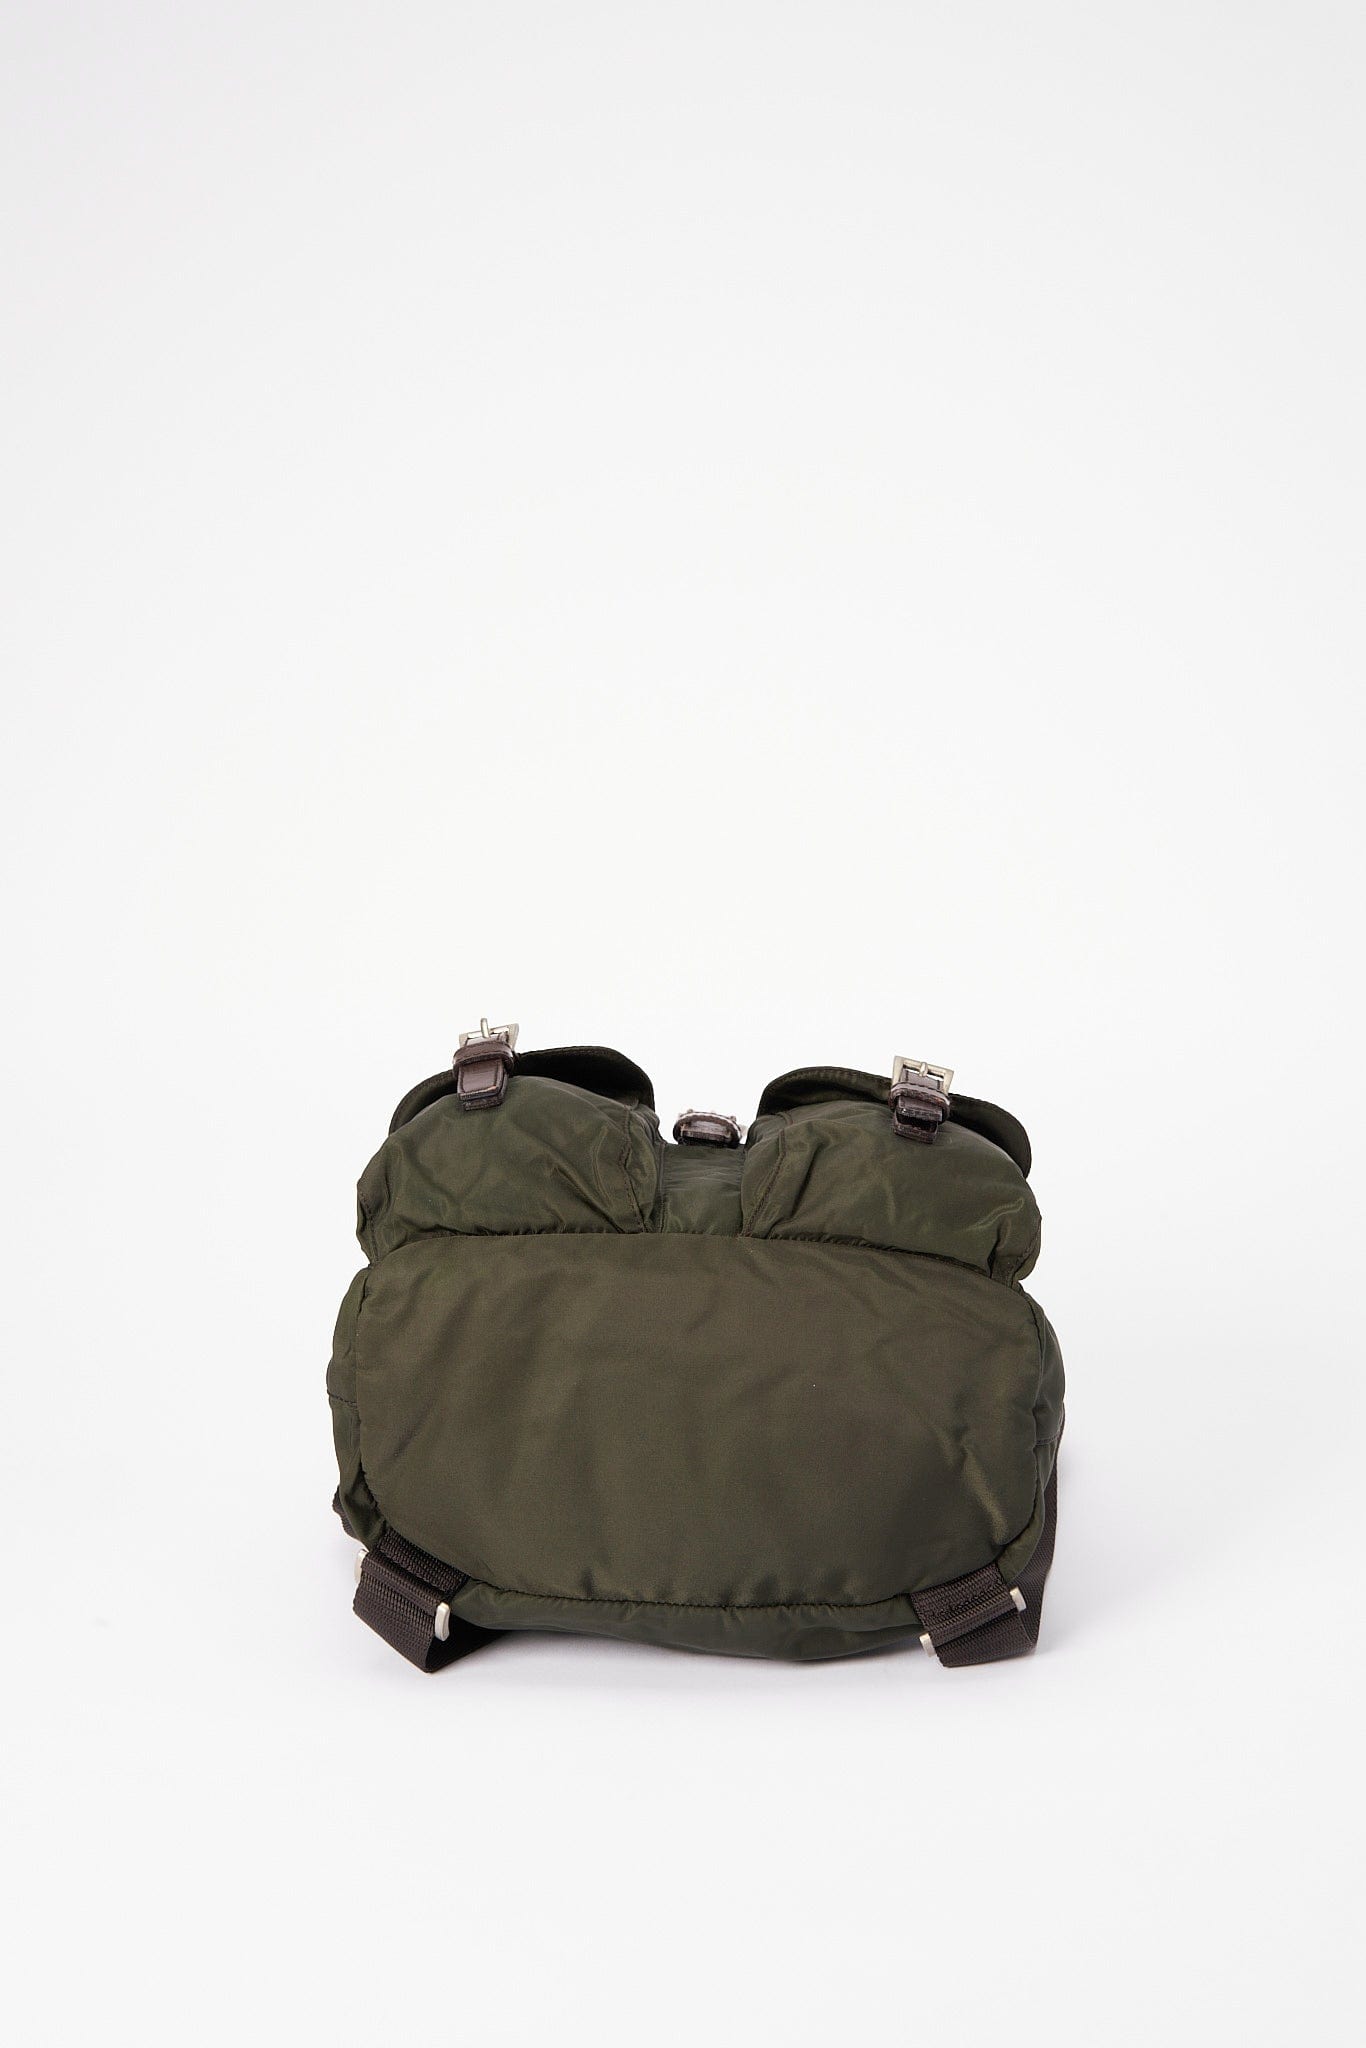 Prada Khaki Nylon Backpack